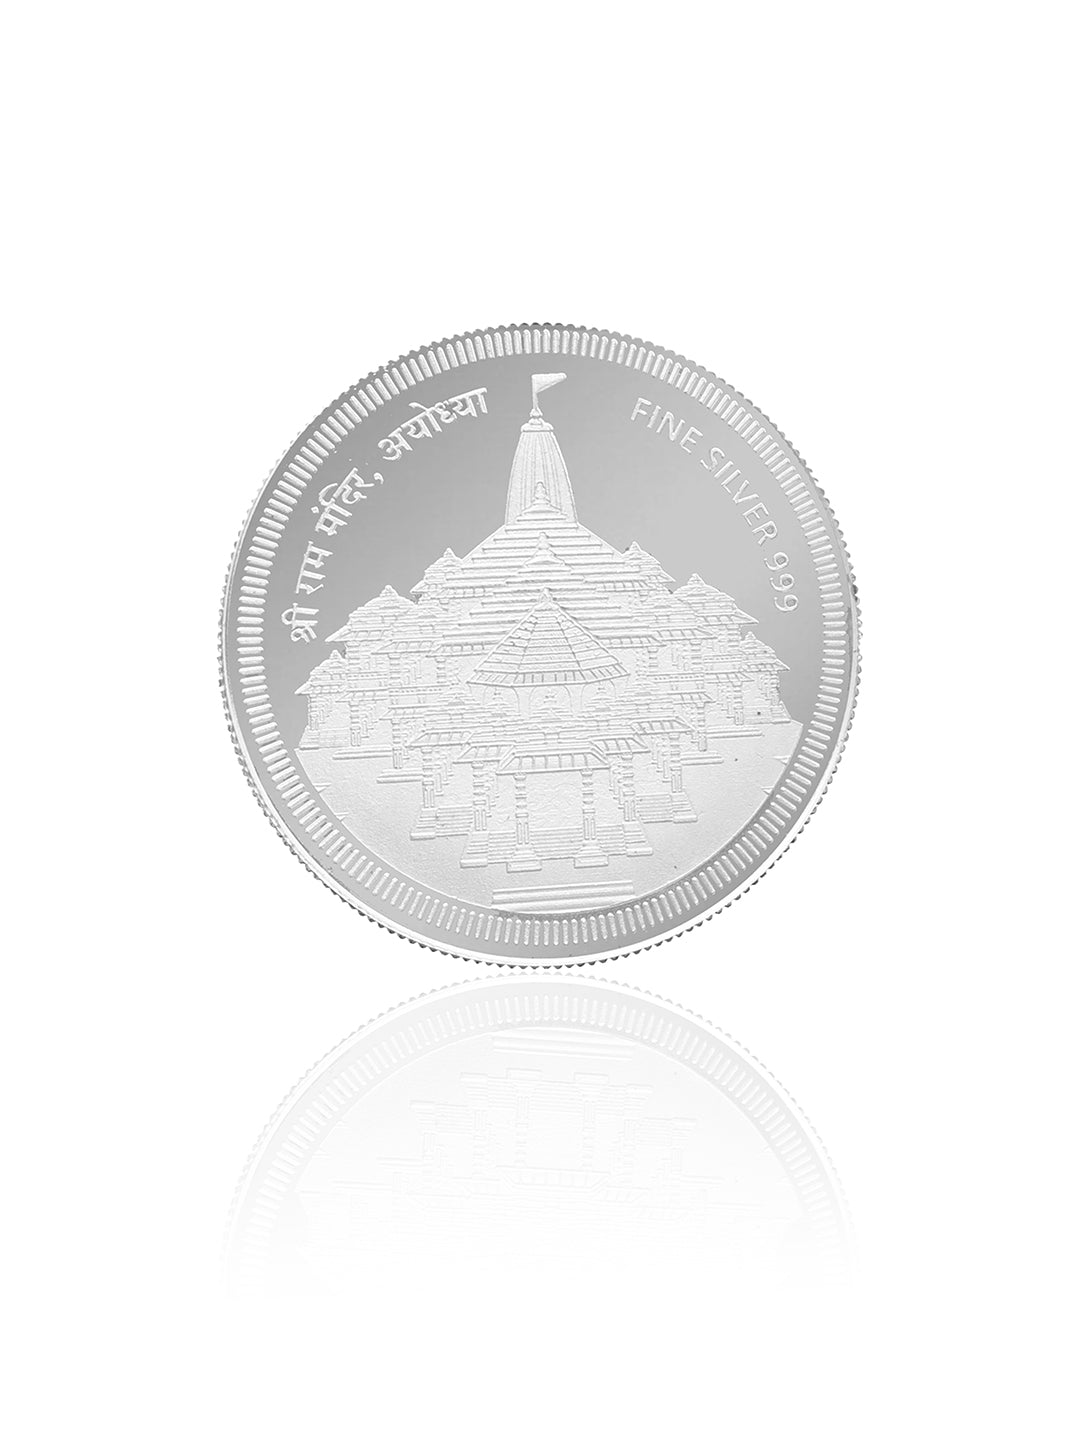 999 Silver Ayodhya Shri Ram Mandir with Ram Darbar Coin 10 Grams